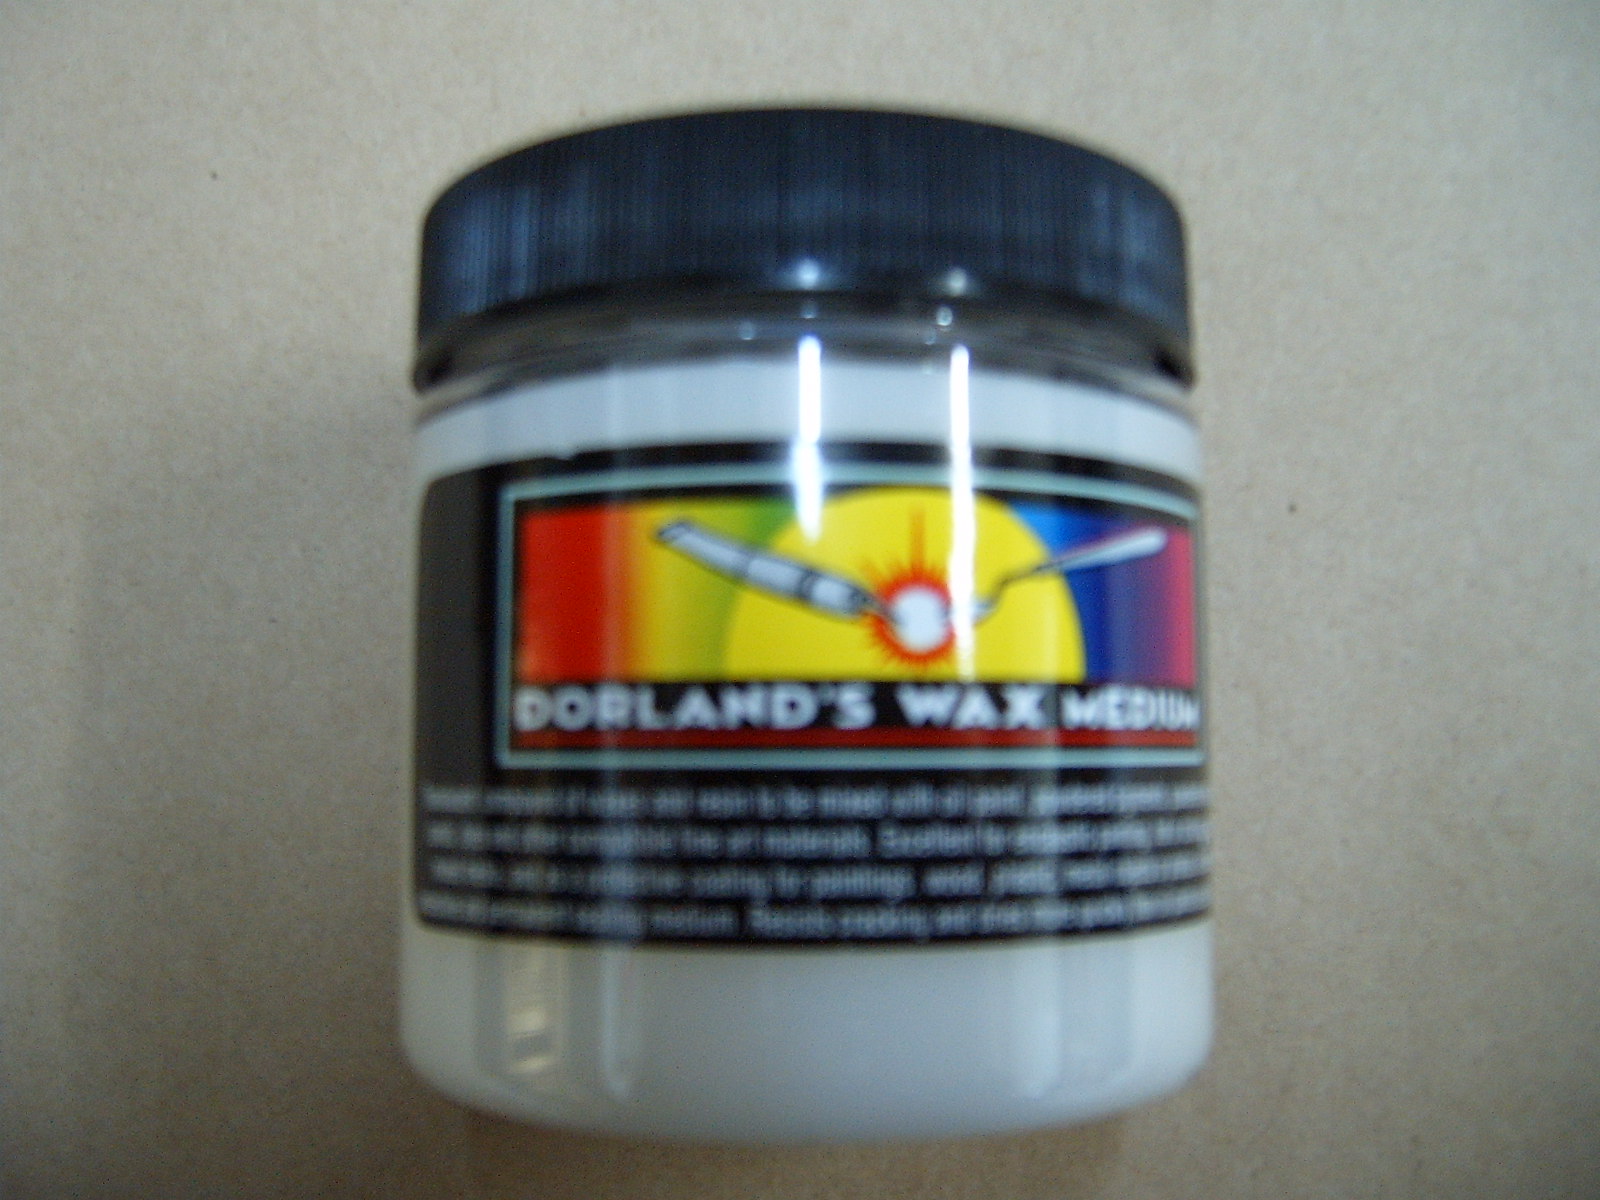 Dorland's Wax Medium